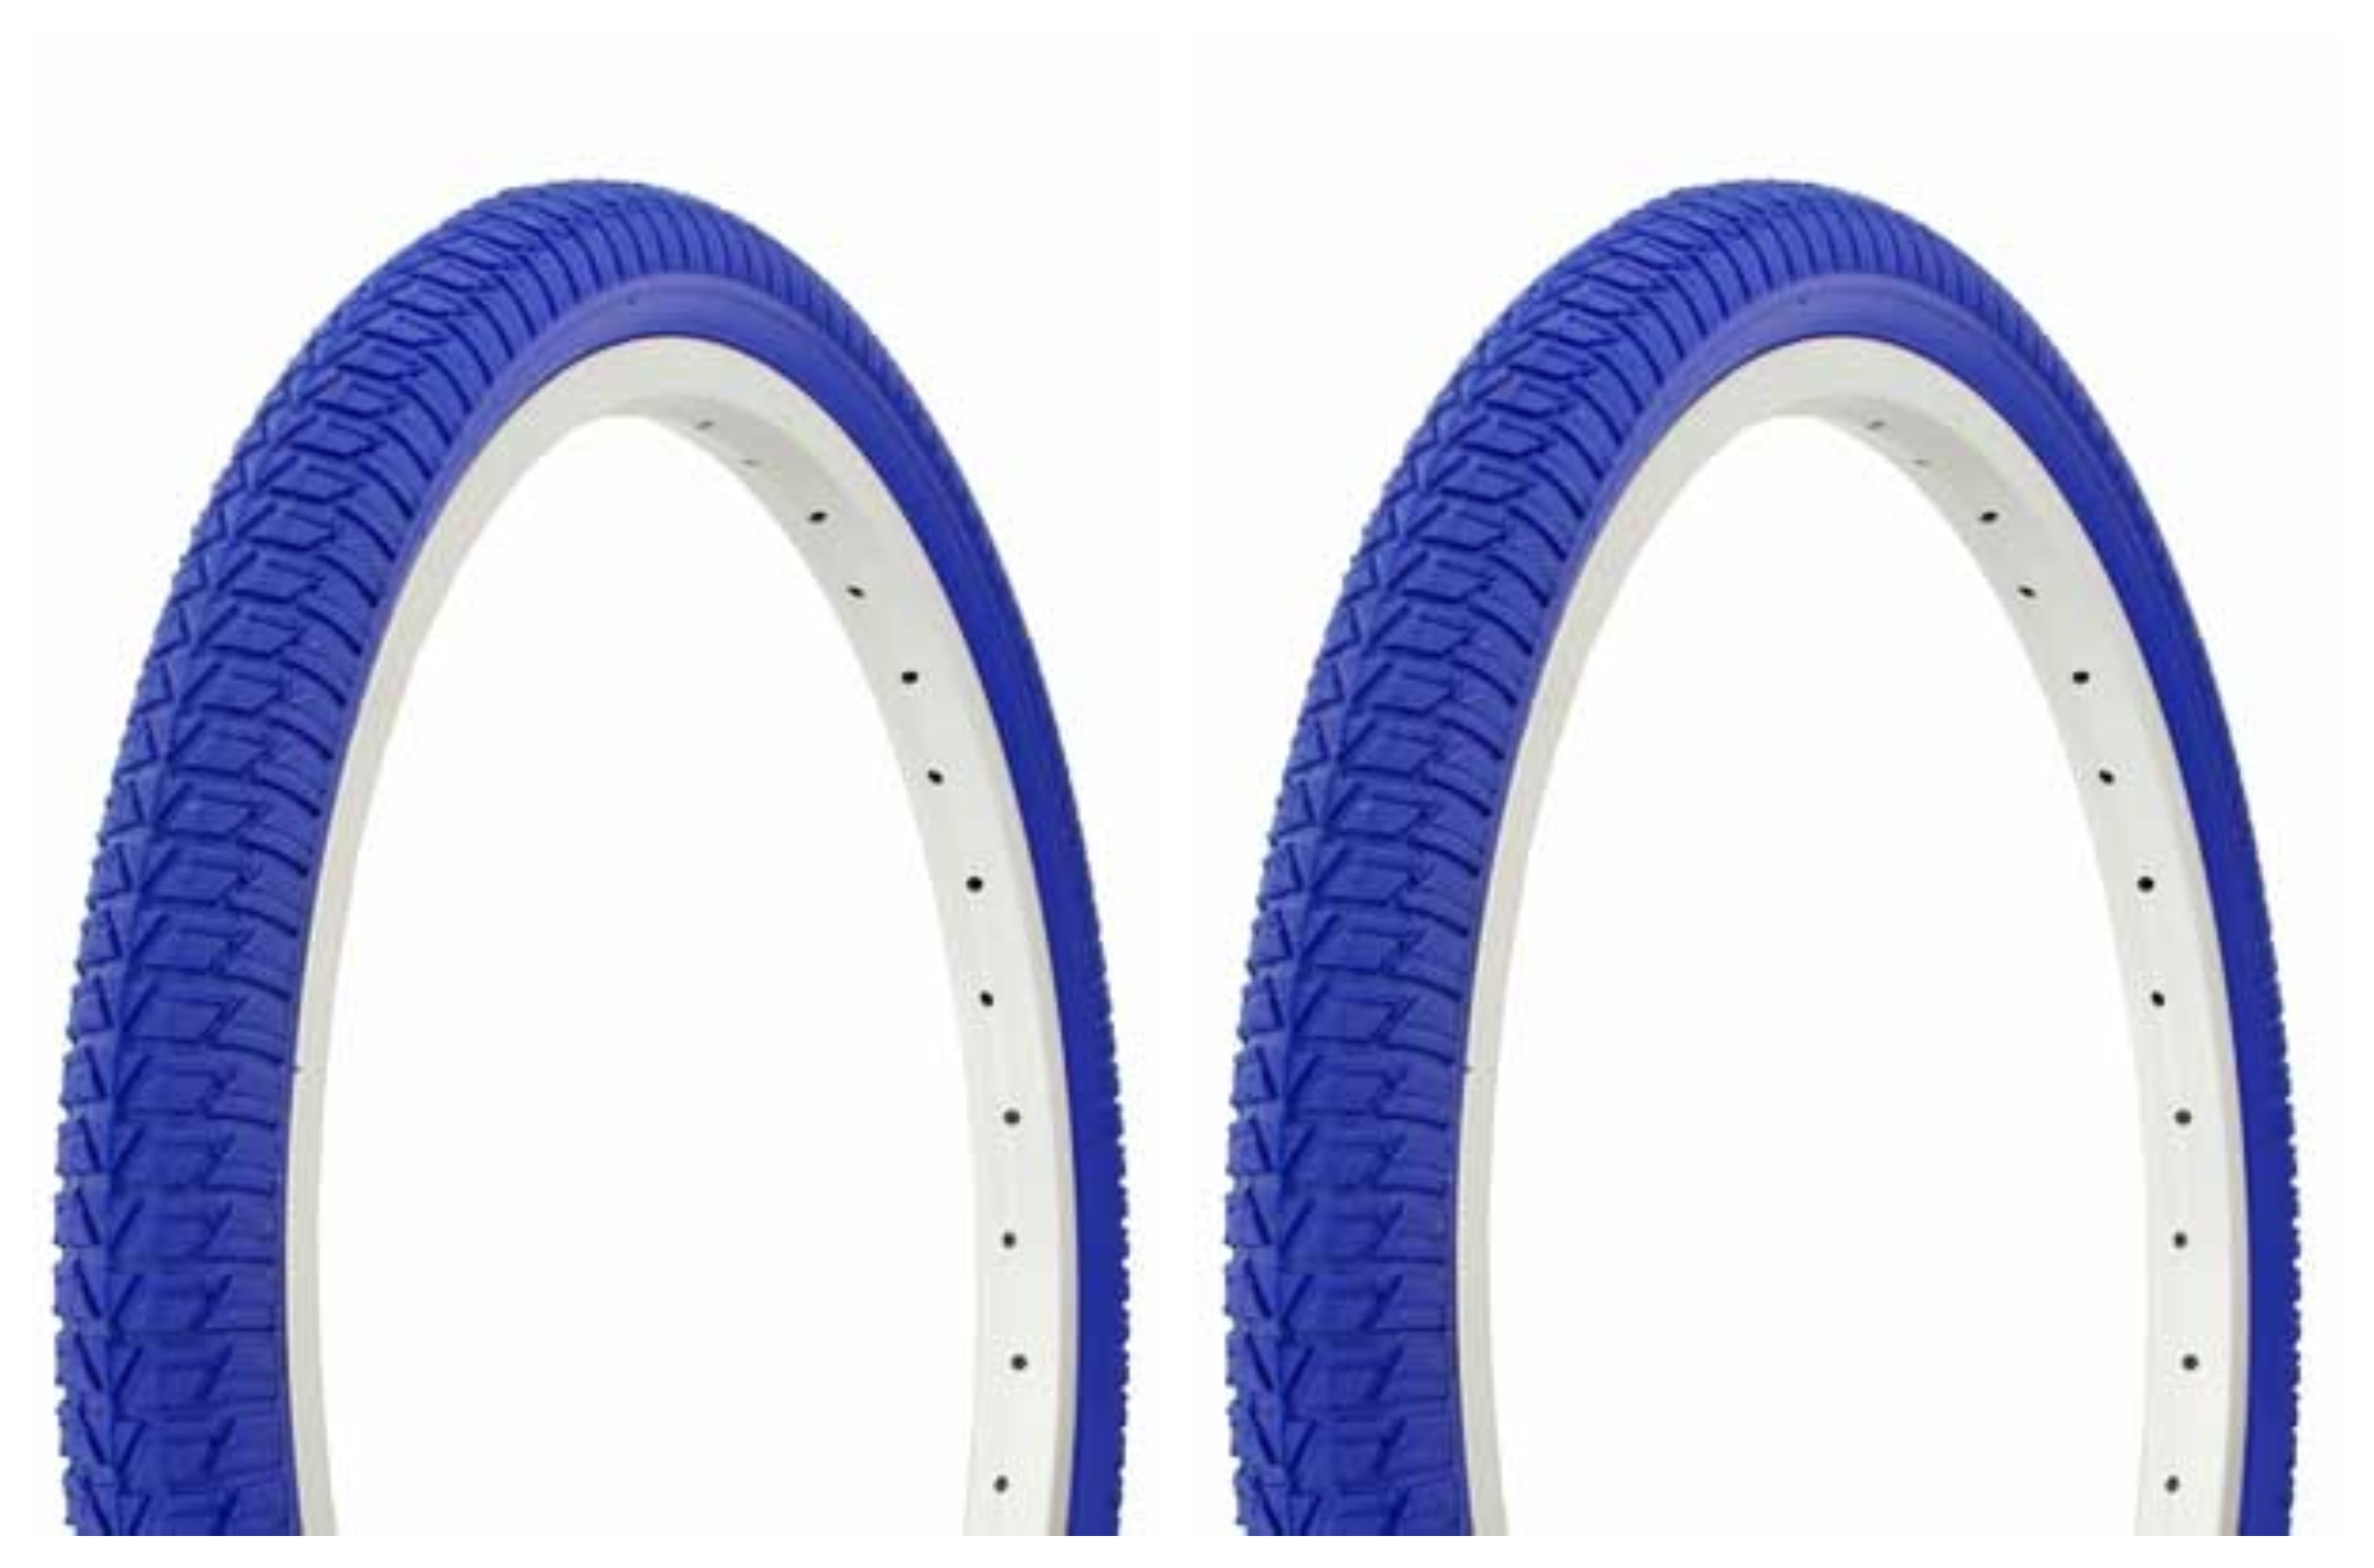 1PAIR Duro Bicycle Bike Tires & Tubes 20" x 1.75" Blue/Blue Sidewall Bike Tire 